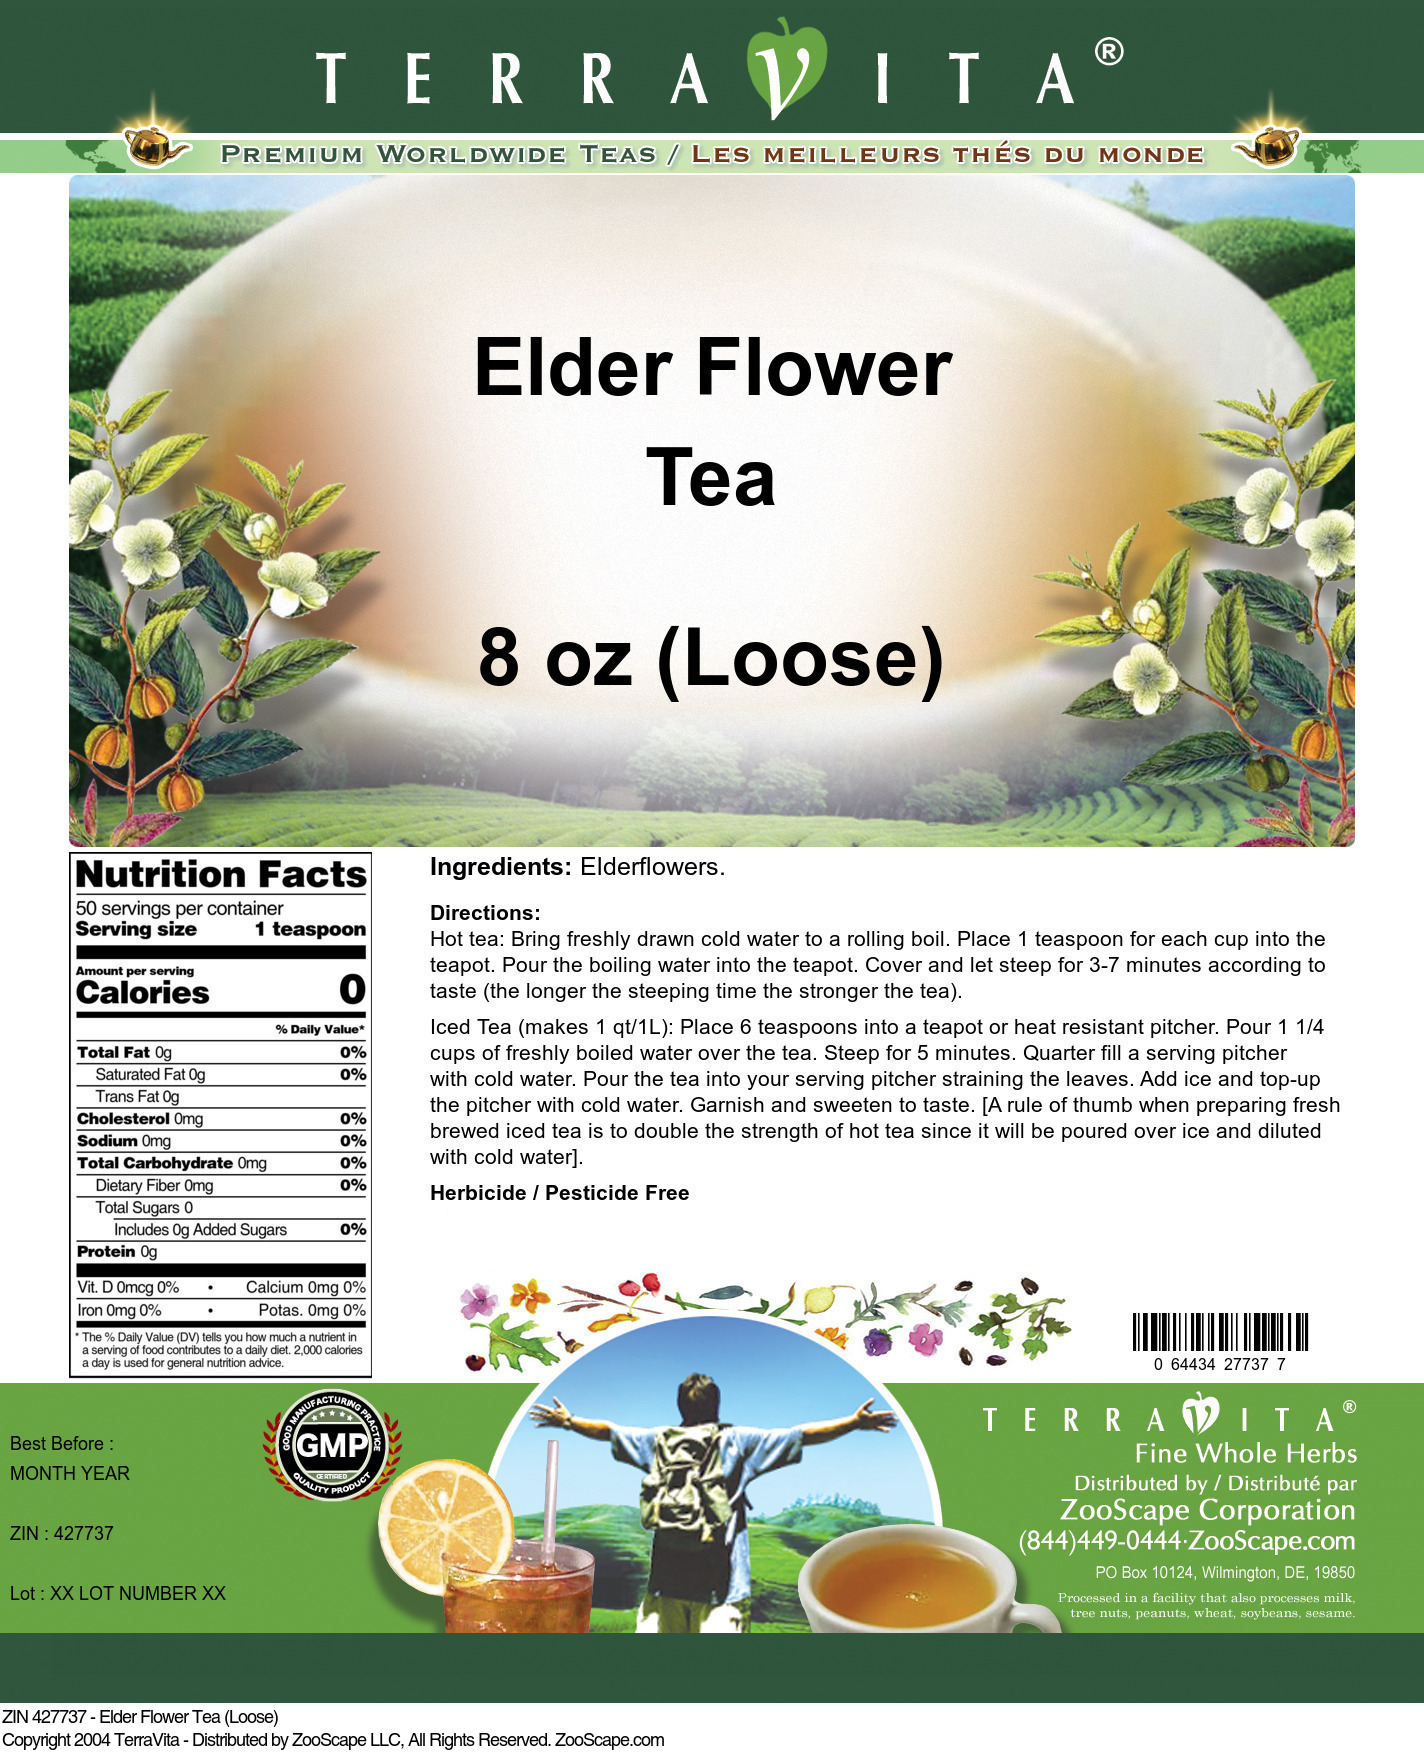 Elder Flower Tea (Loose) - Label